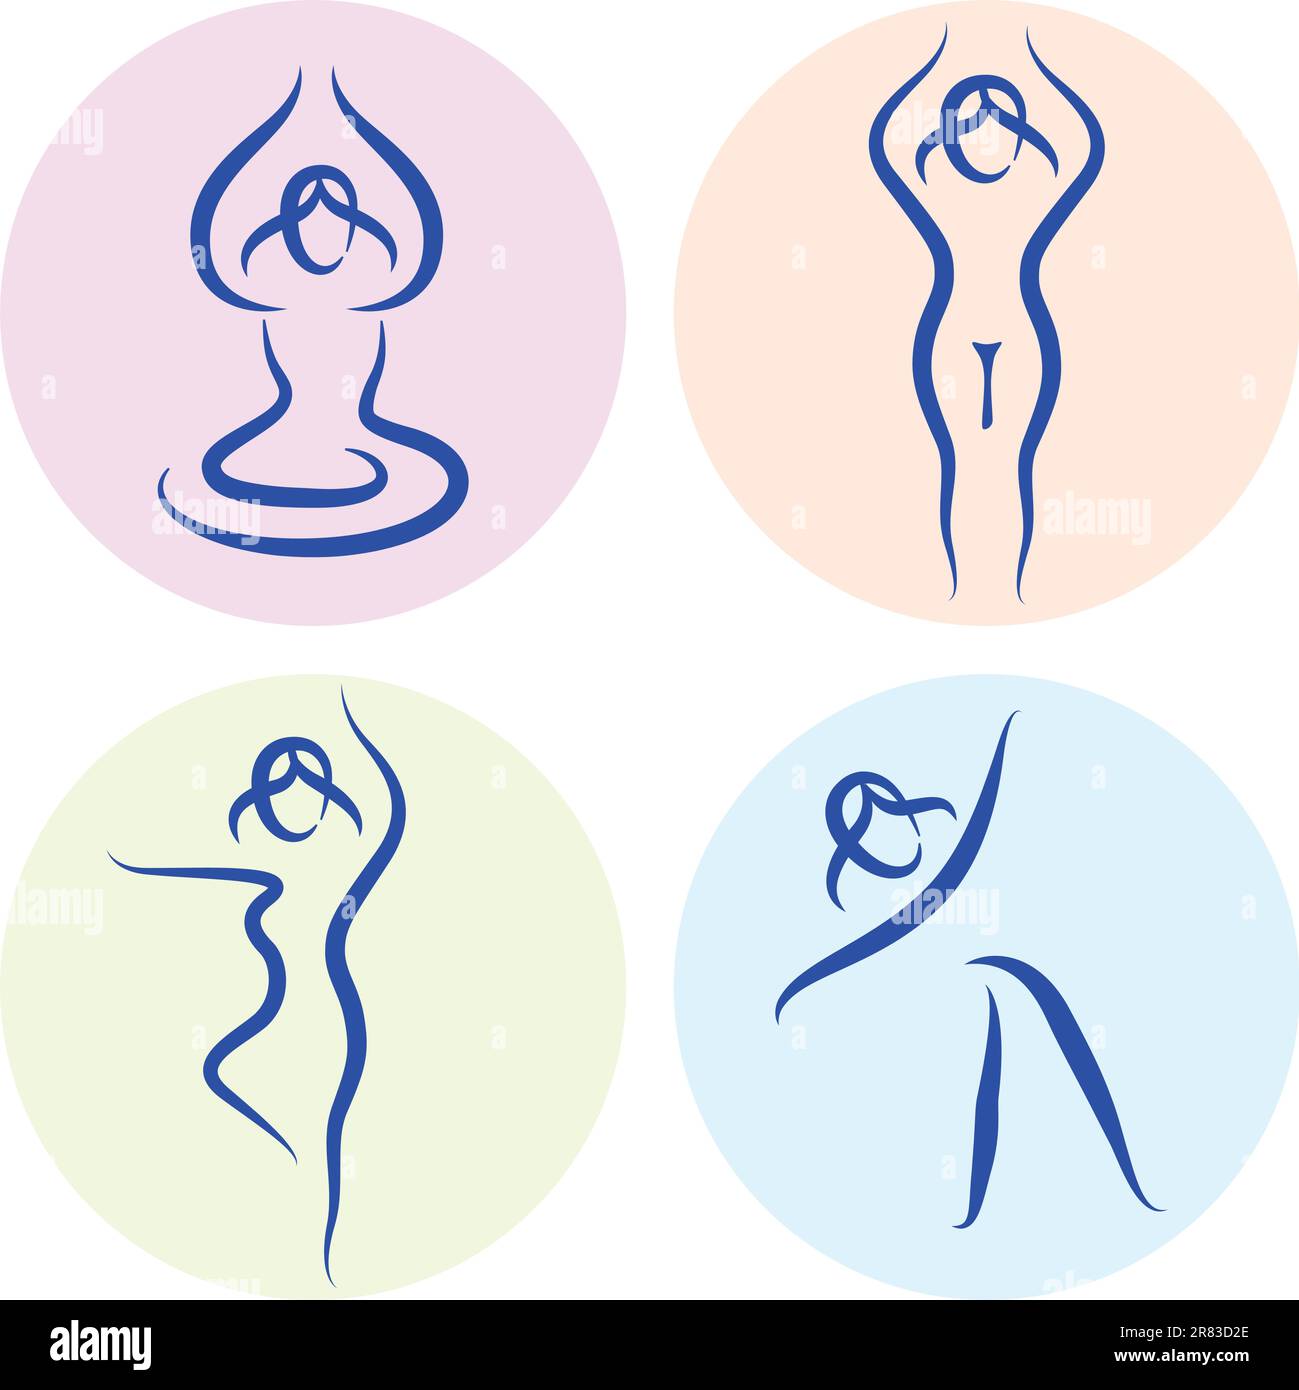 Yoga for beginners poses stick figure set Stock Vector Image & Art - Alamy